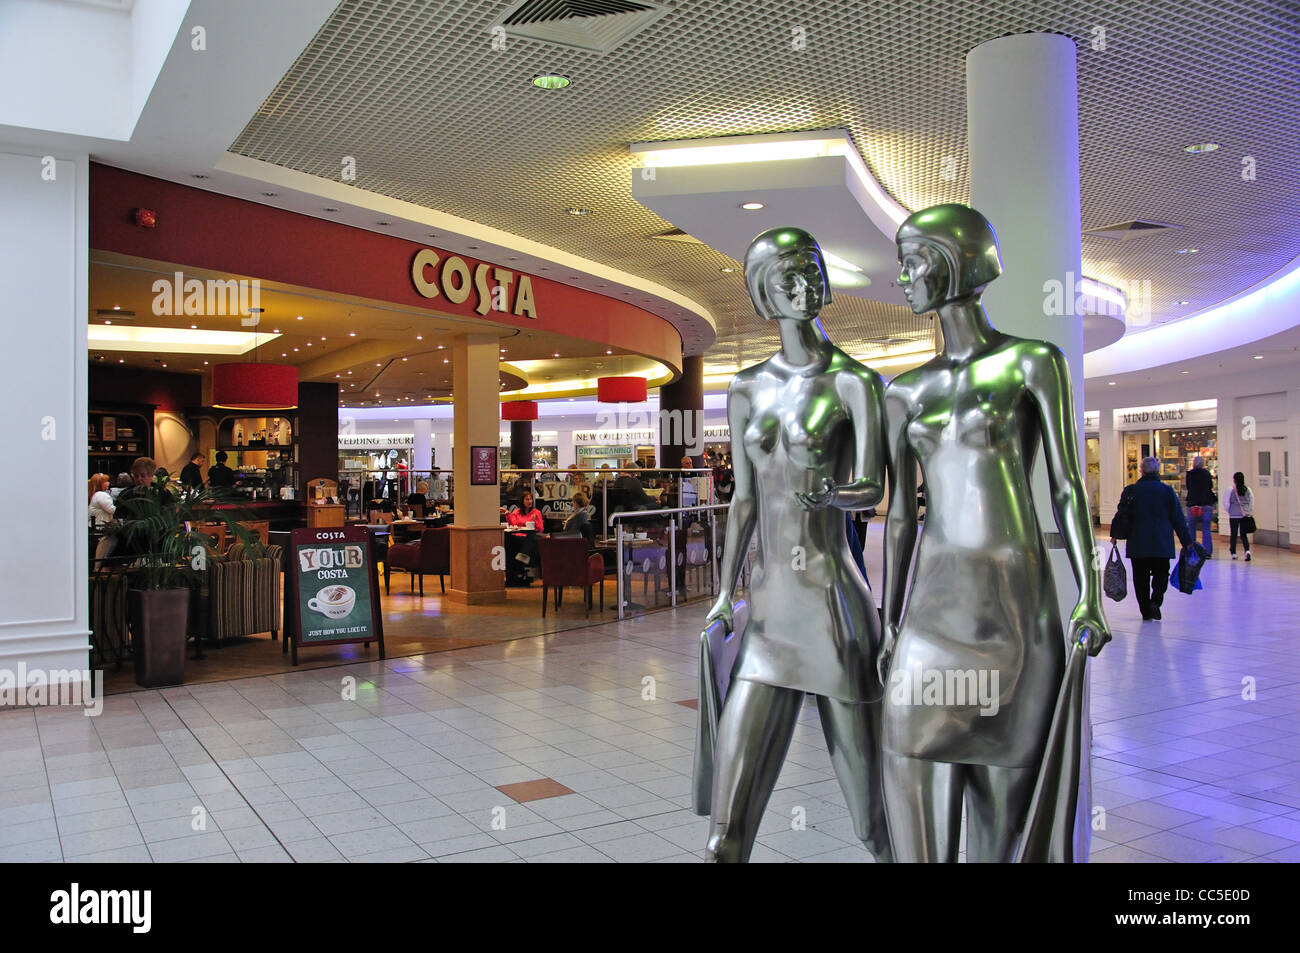 Costa Coffee Shop at Metro Shopping Centre, Gateshead, Tyne and Wear, England, United Kingdom Stock Photo